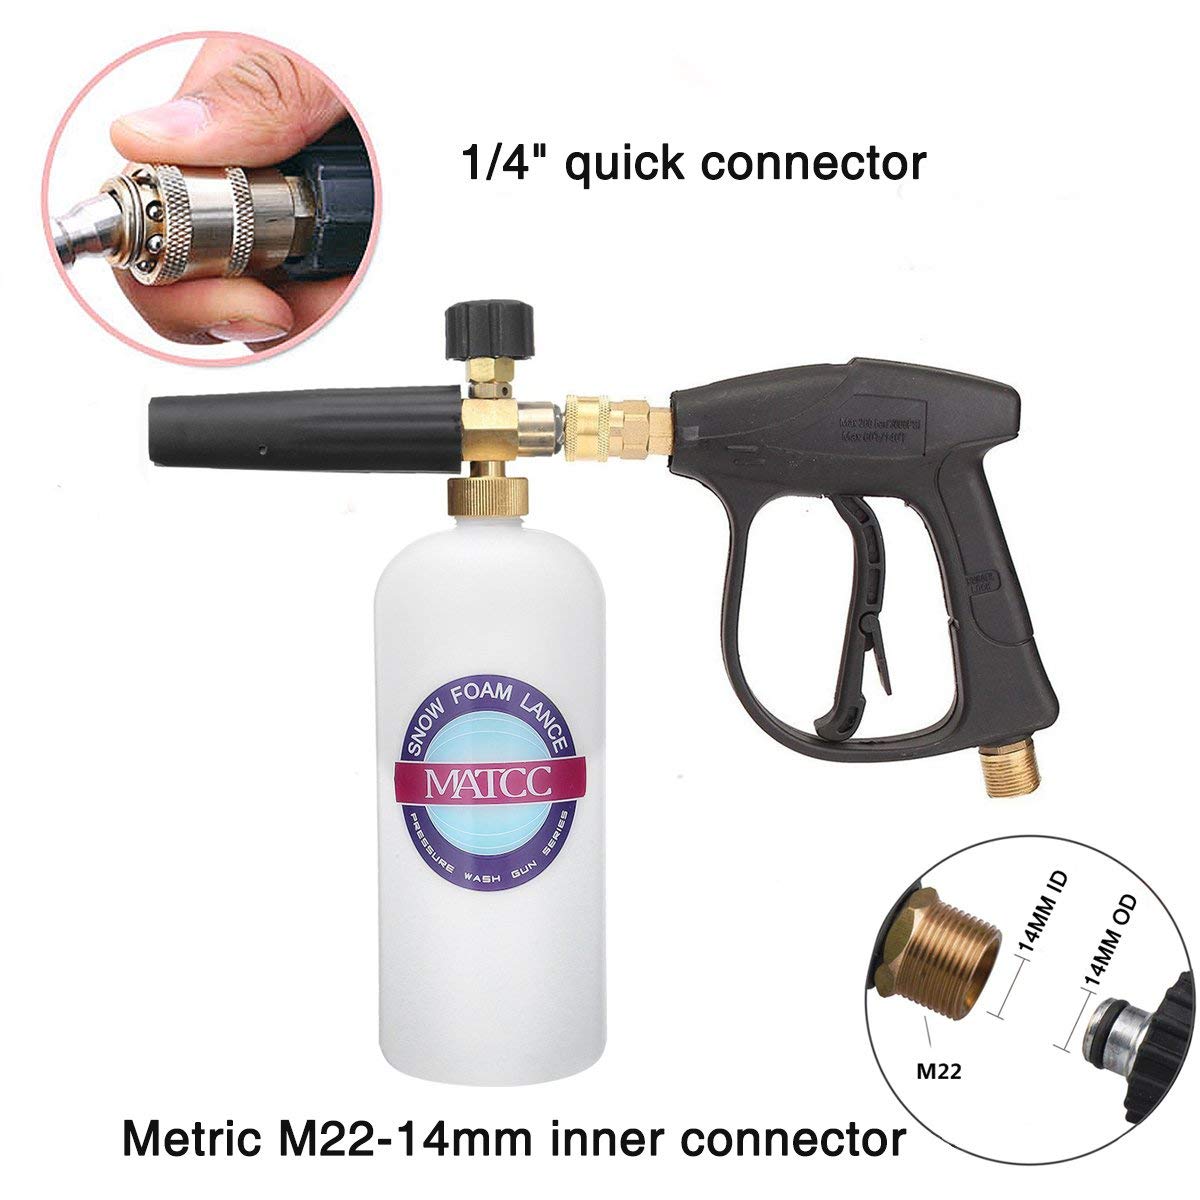 MATCC Foam Wash 3000 PSI High Pressure Washer With 1L Foam Lance Bottle Car Cleaning